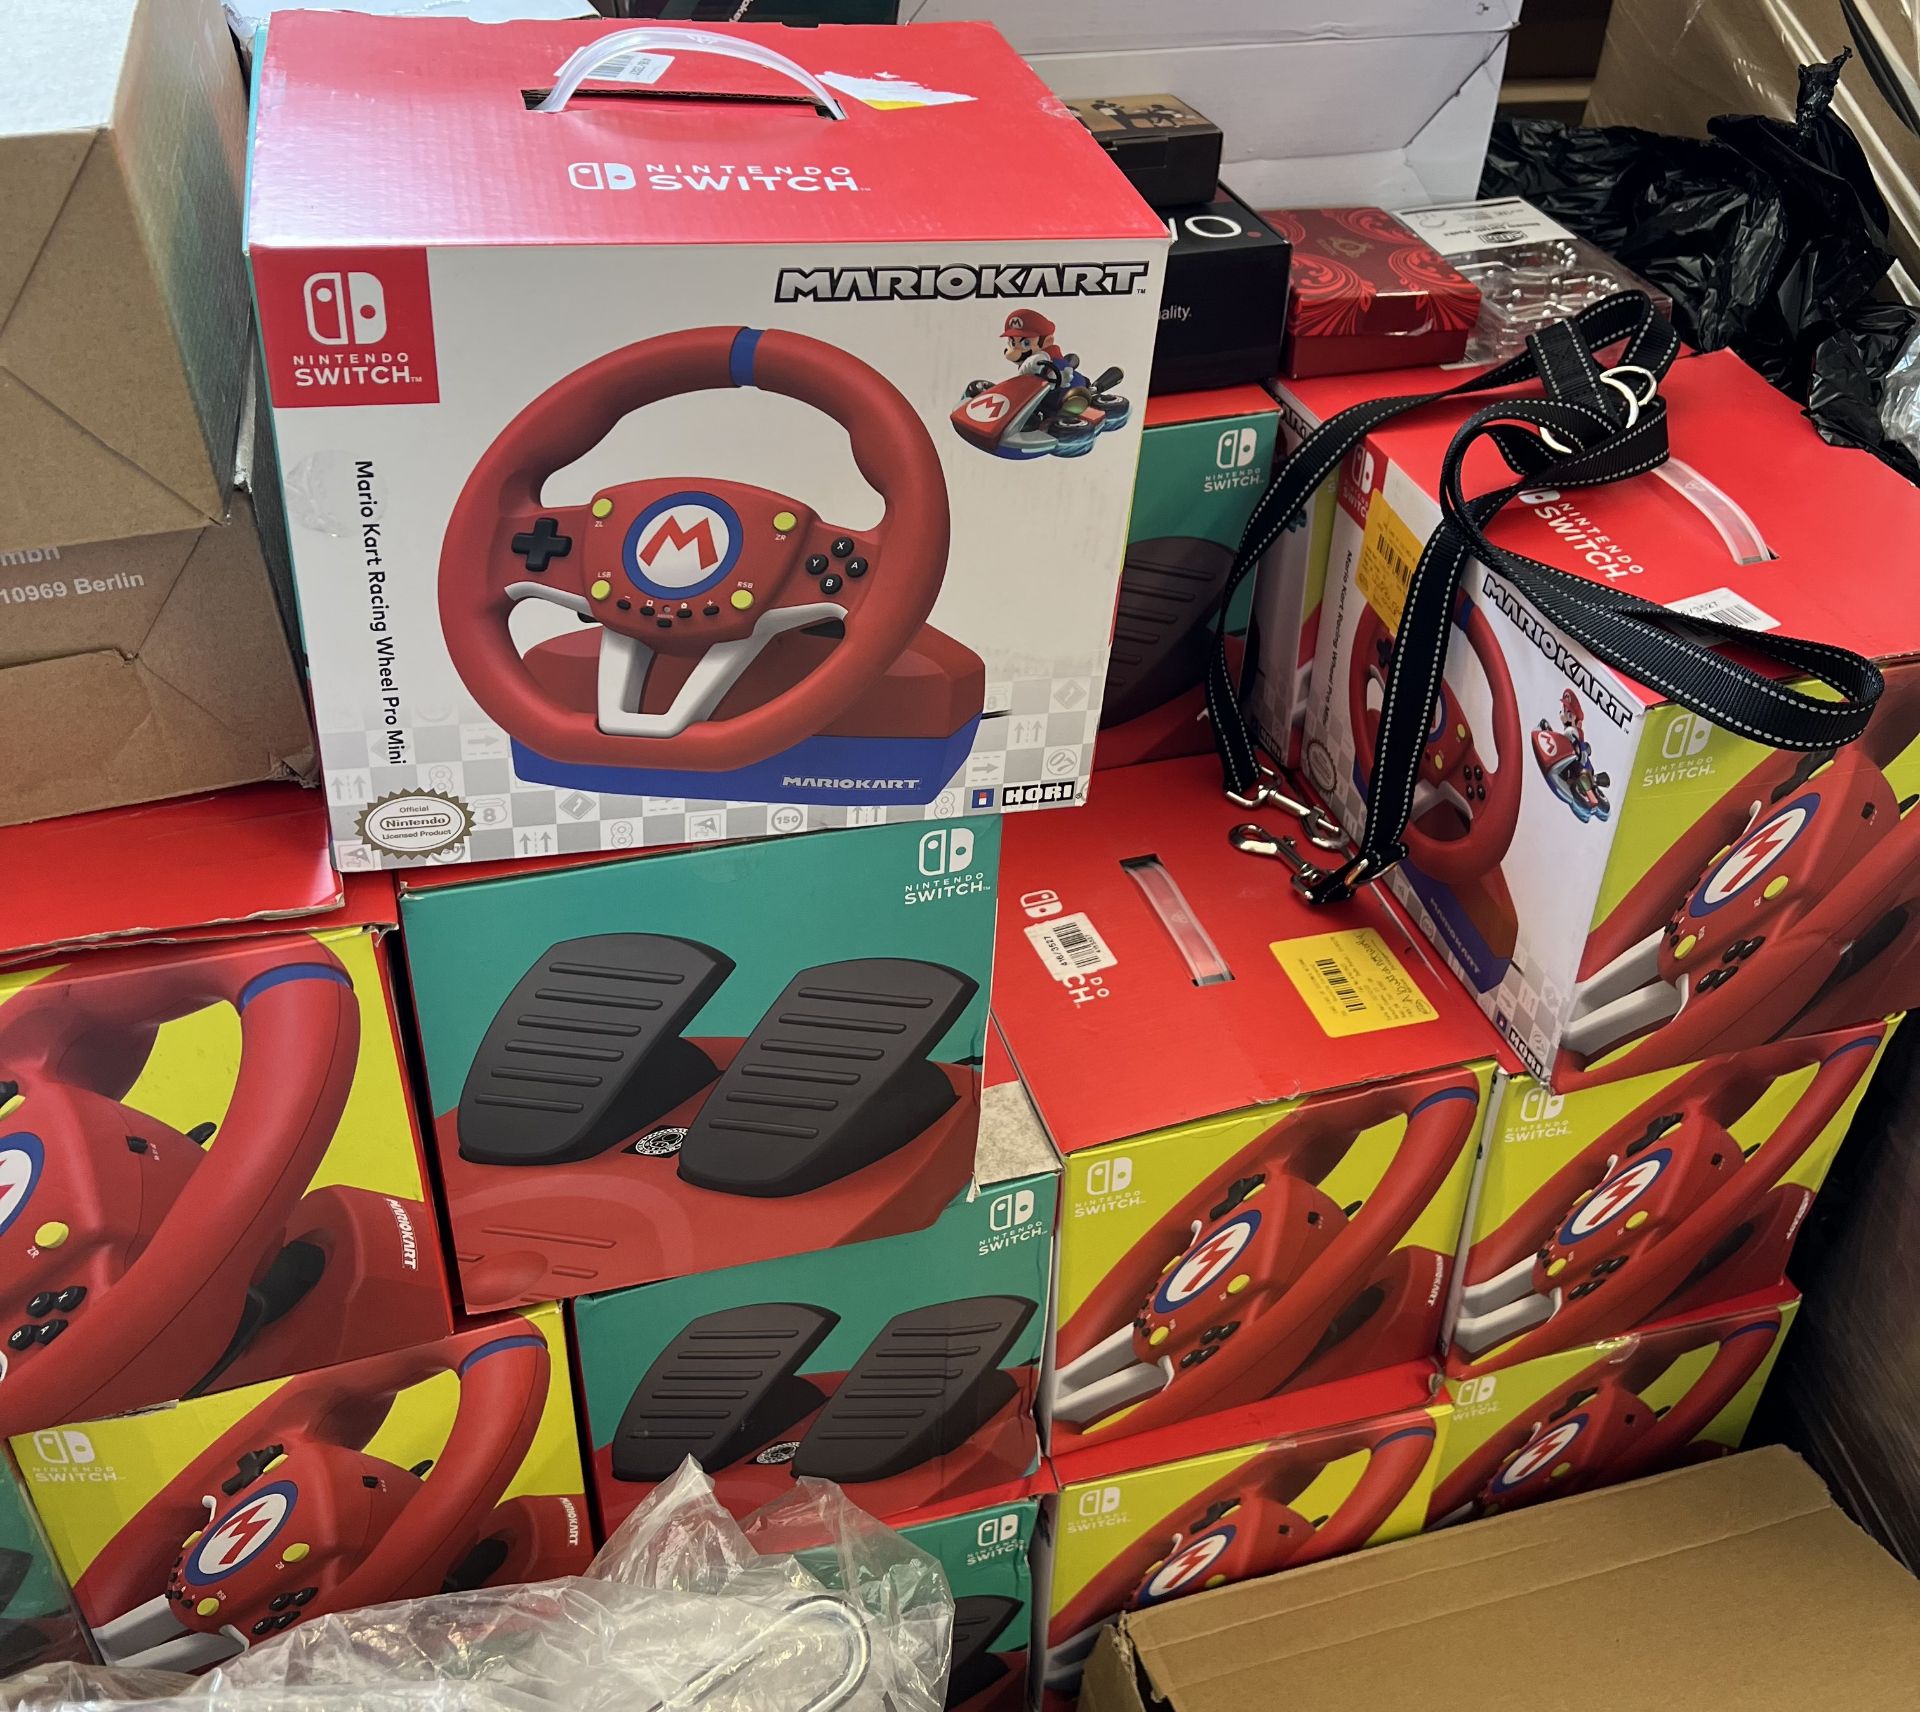 RAW RETURN - 5 x HORI Mario Kart Racing Wheel Pro Mini for Nintendo Switch - RRP NEW WOULD BE £325! - Image 3 of 9